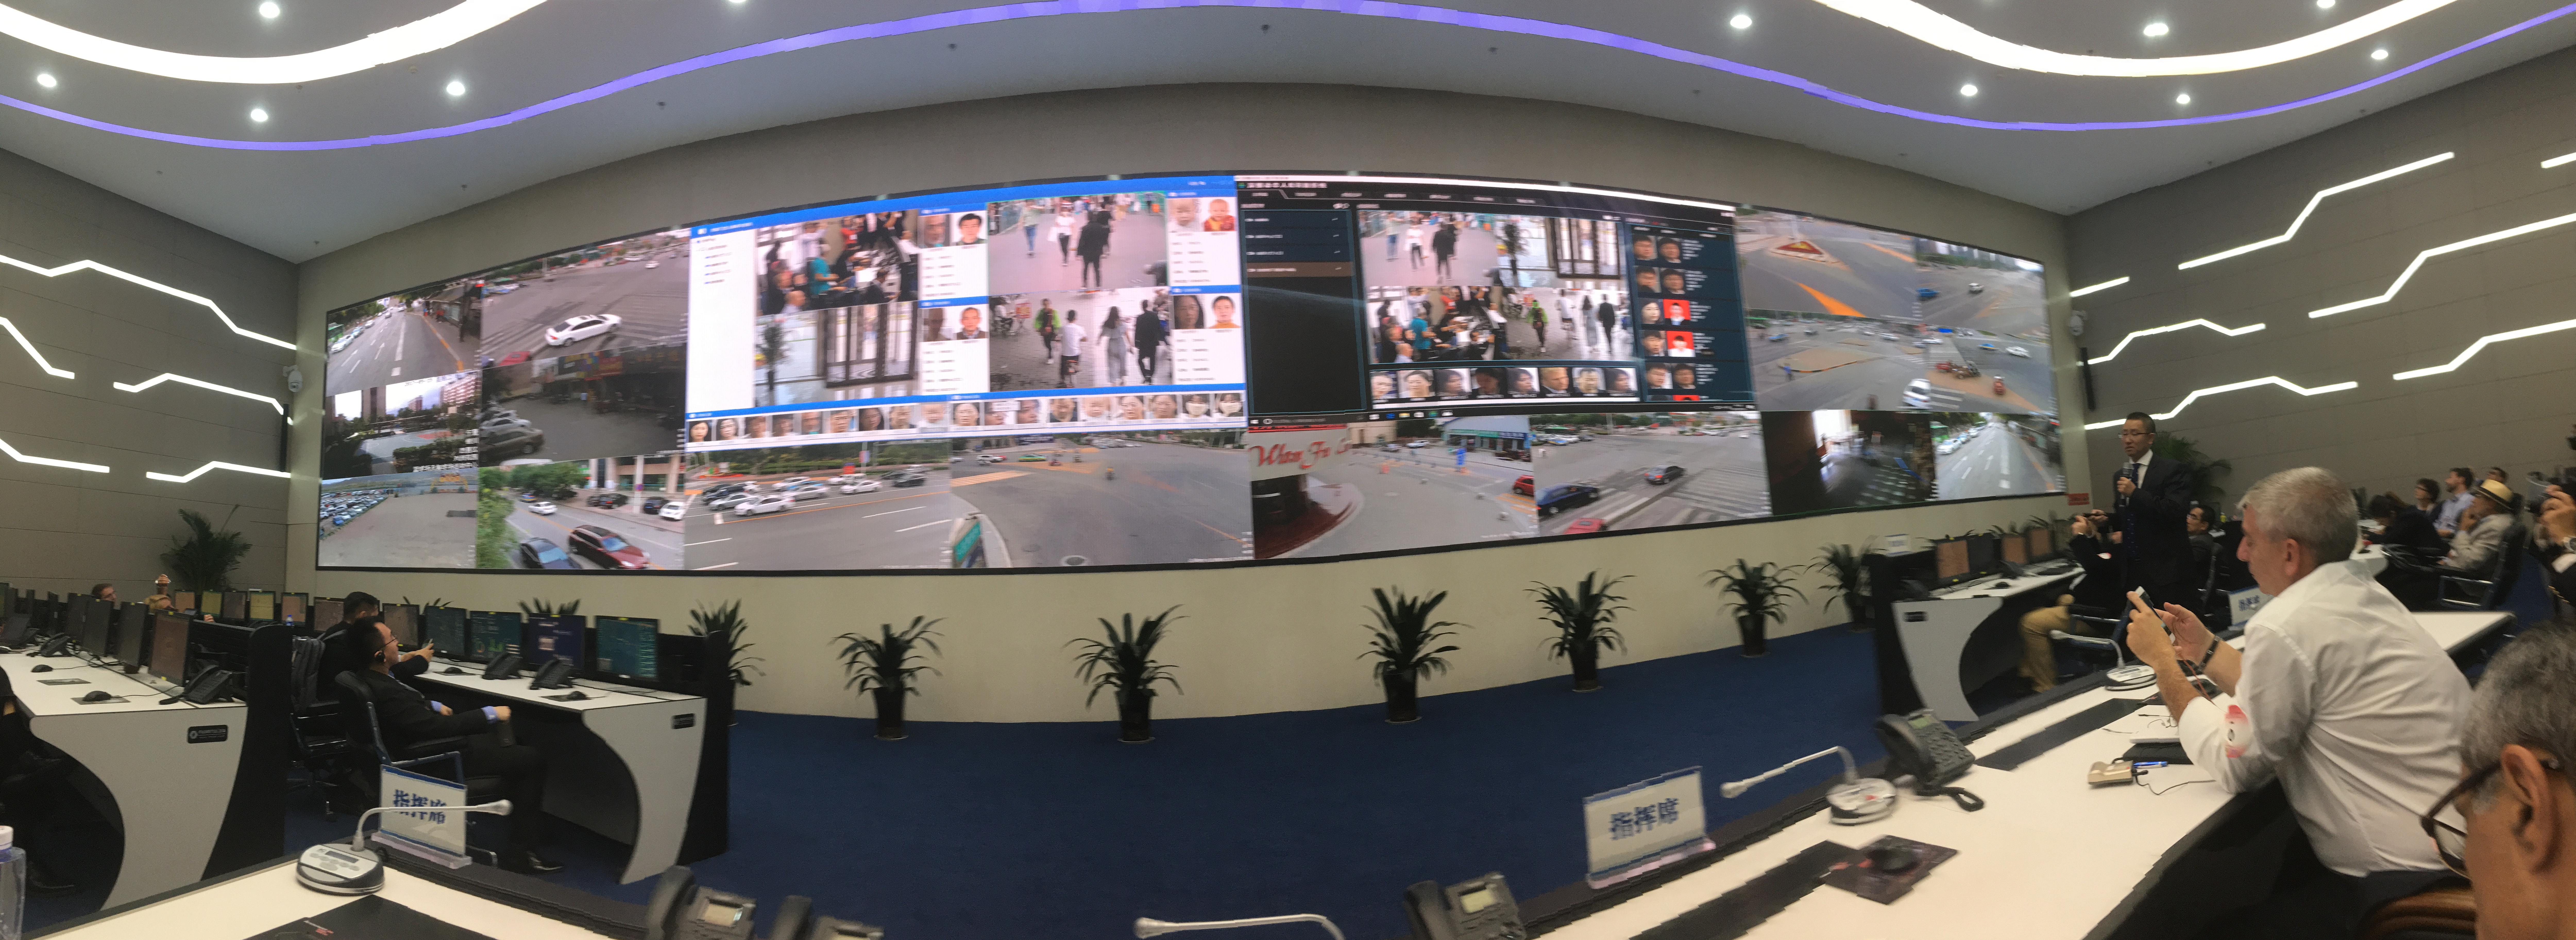 Yinchuan smart city command control centre 2016 DR.JPG